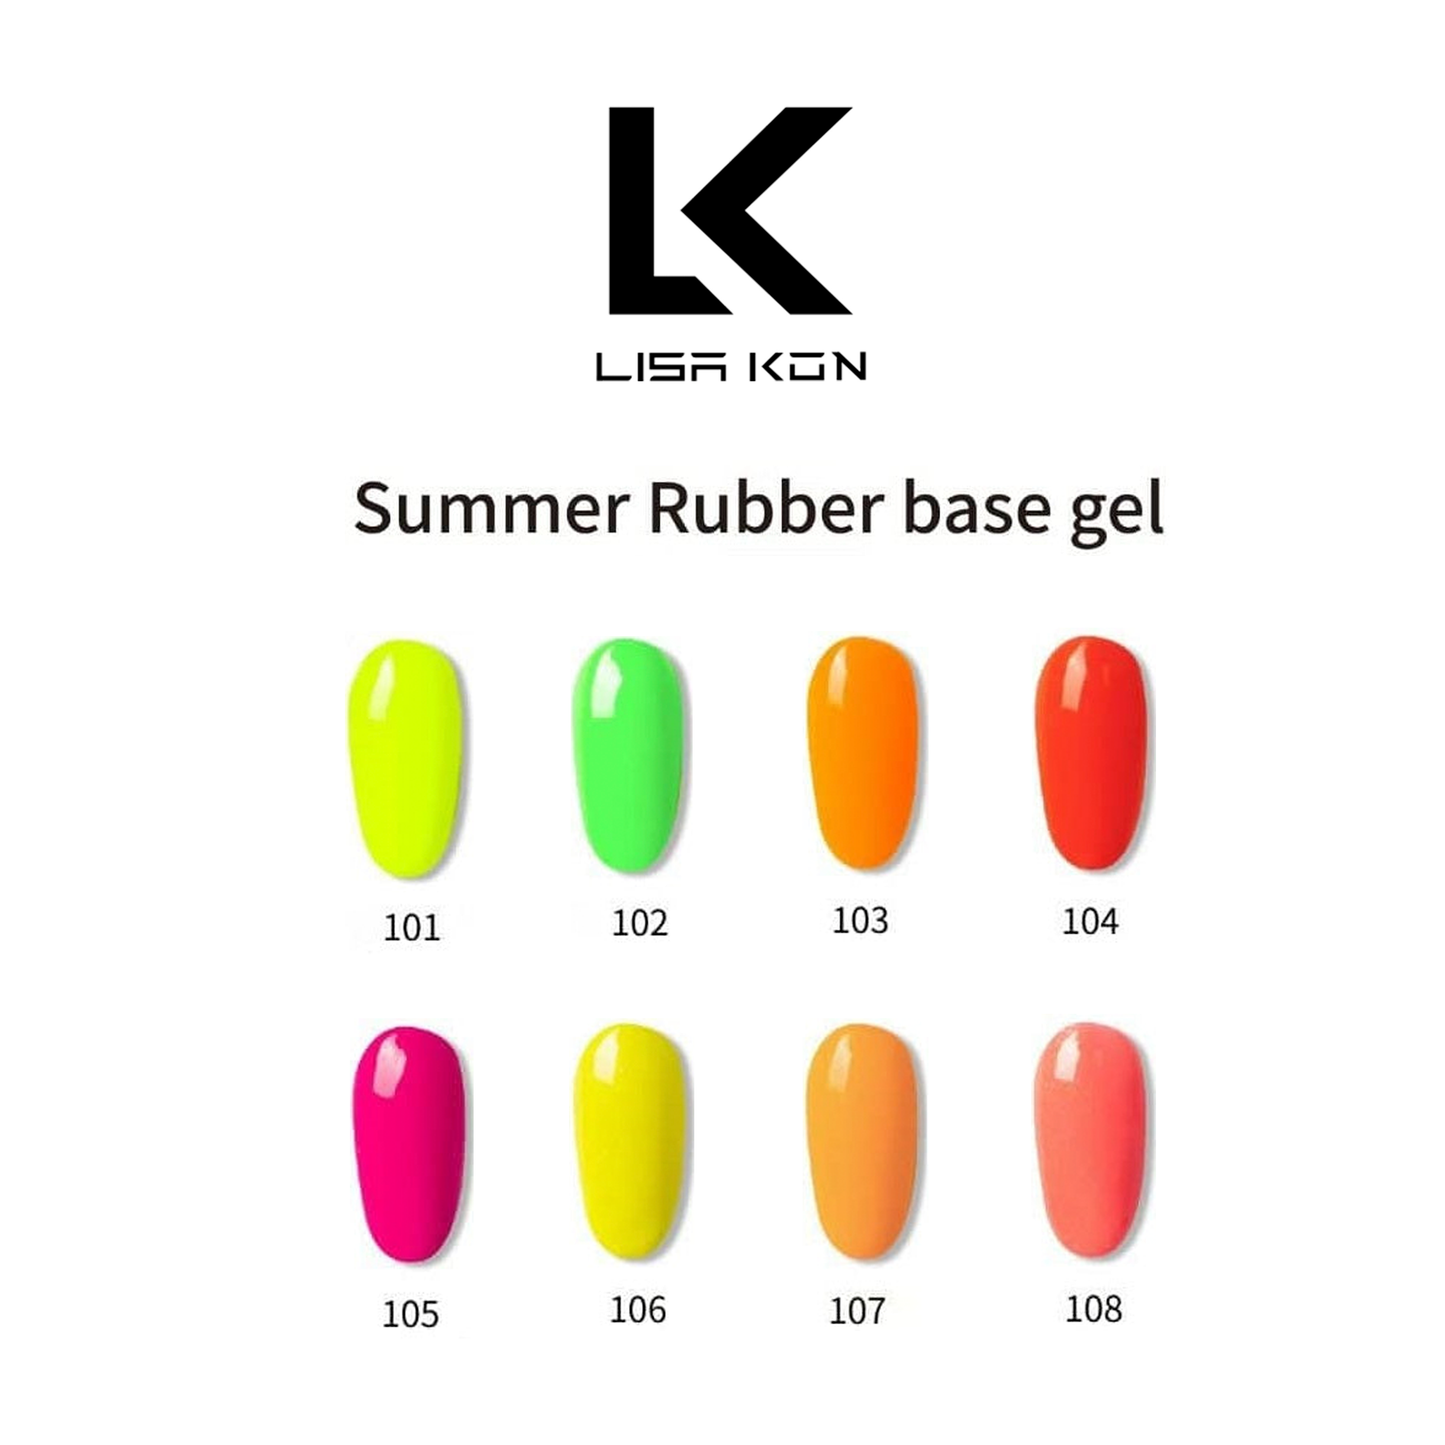 Nueva colección Summer Rubber Base: 8 colores neón